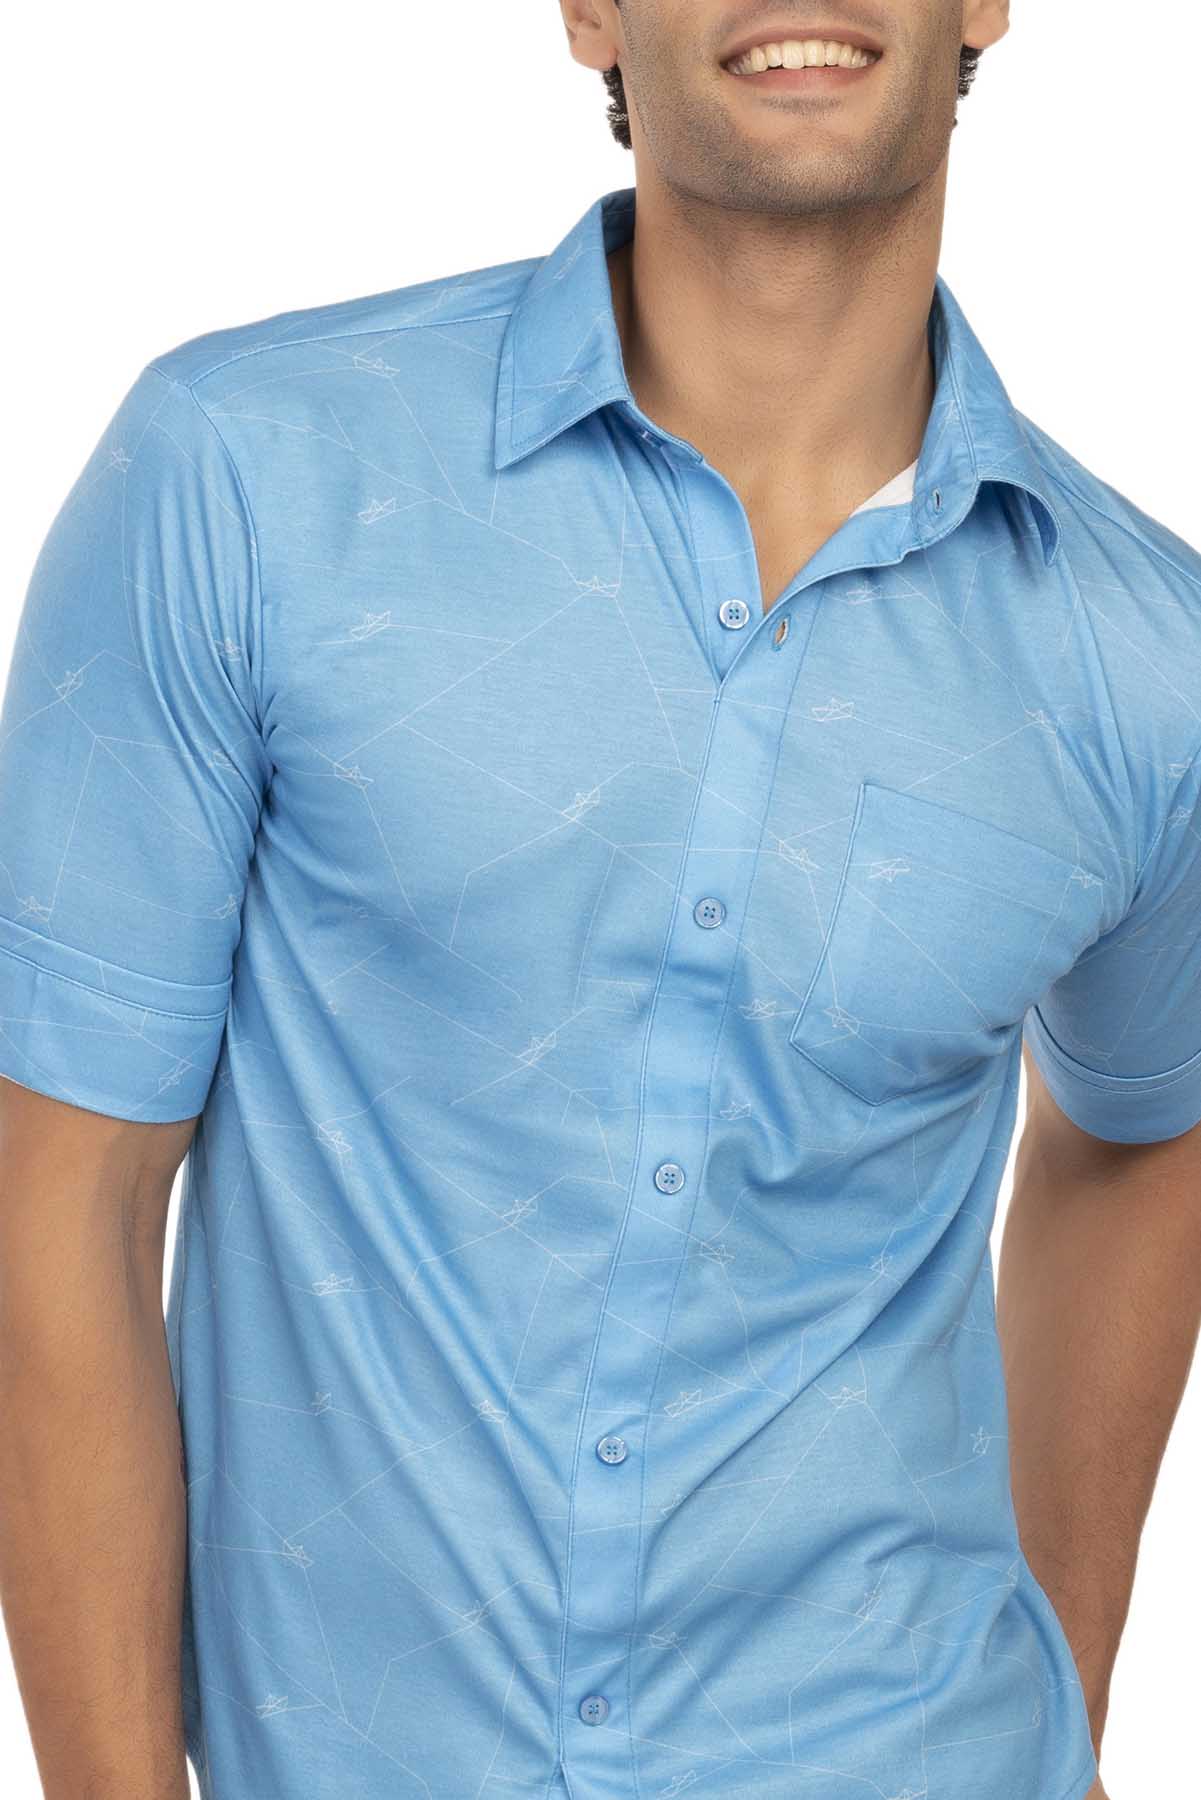 Ocean Blue Geometric Paper Boat Pattern Regular Fit Shirtee